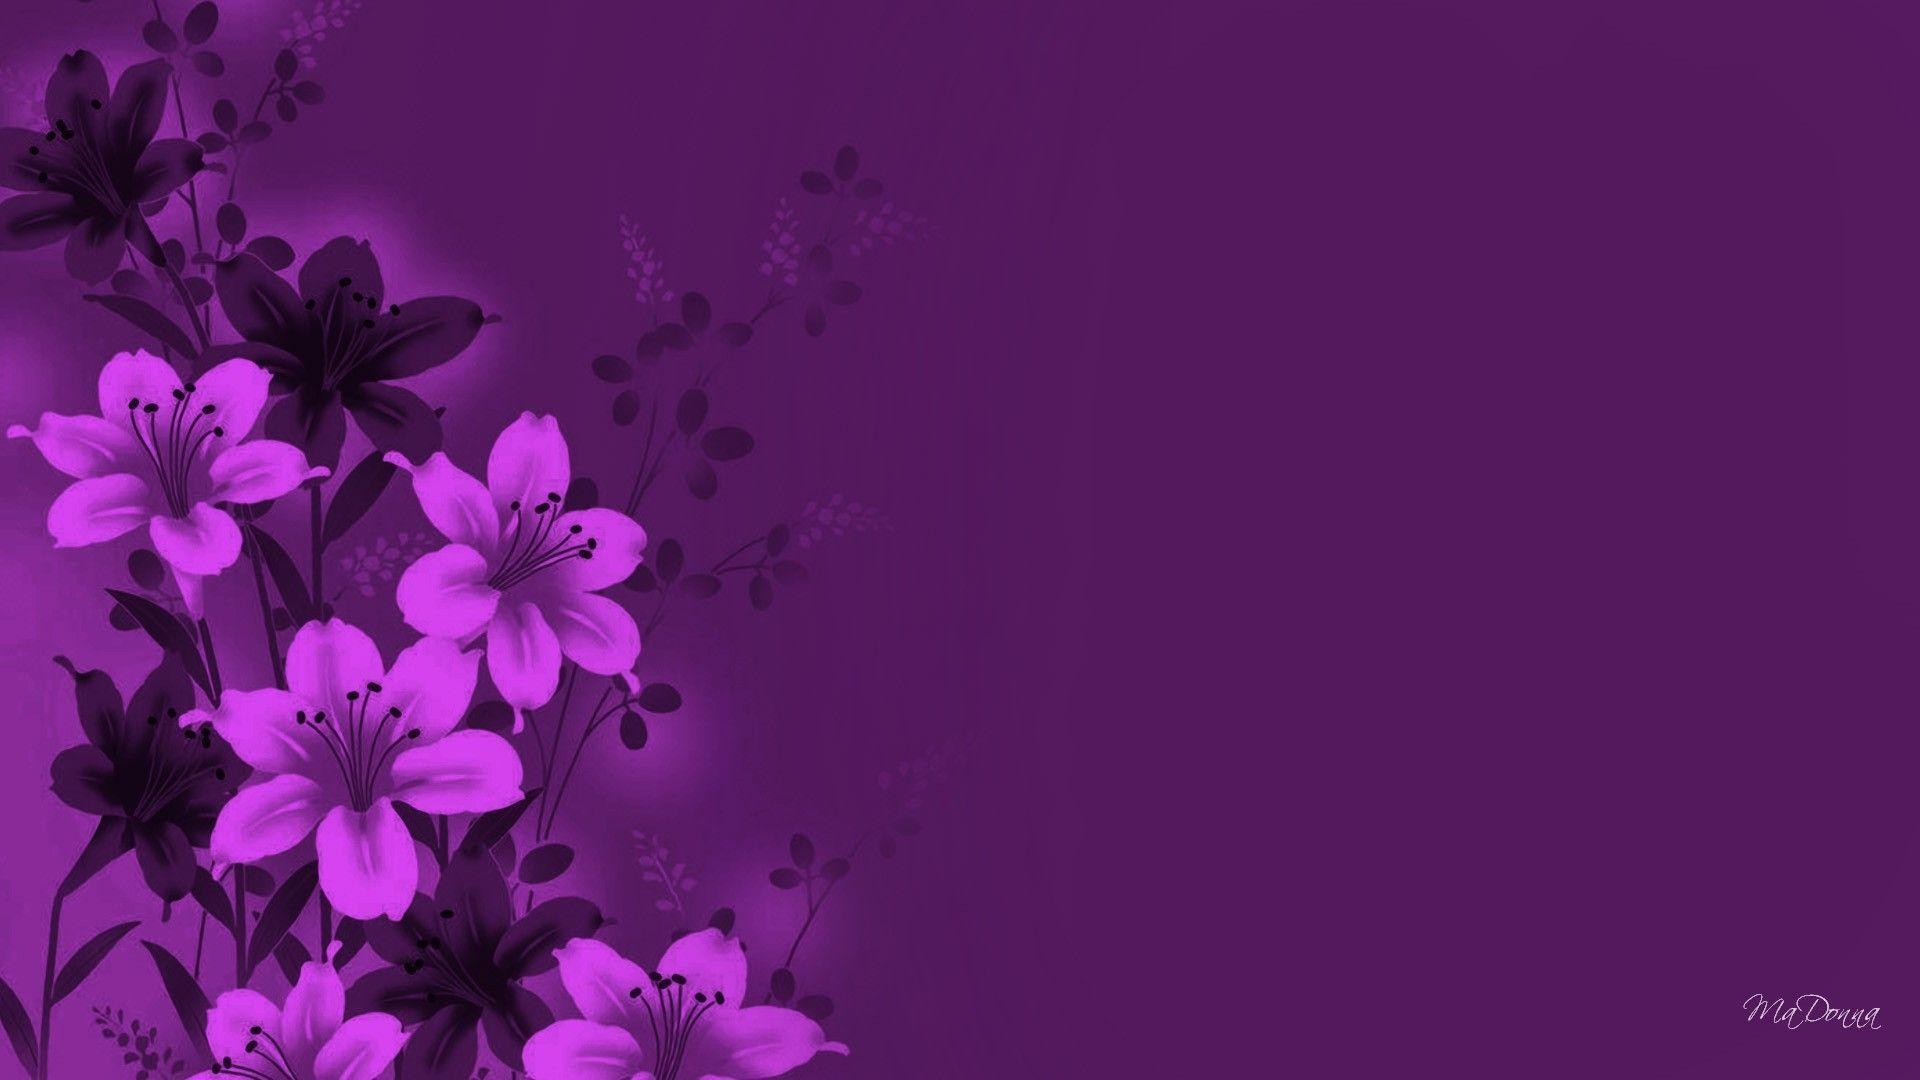 Florals in Magenta, Desktop and mobile wallpaper